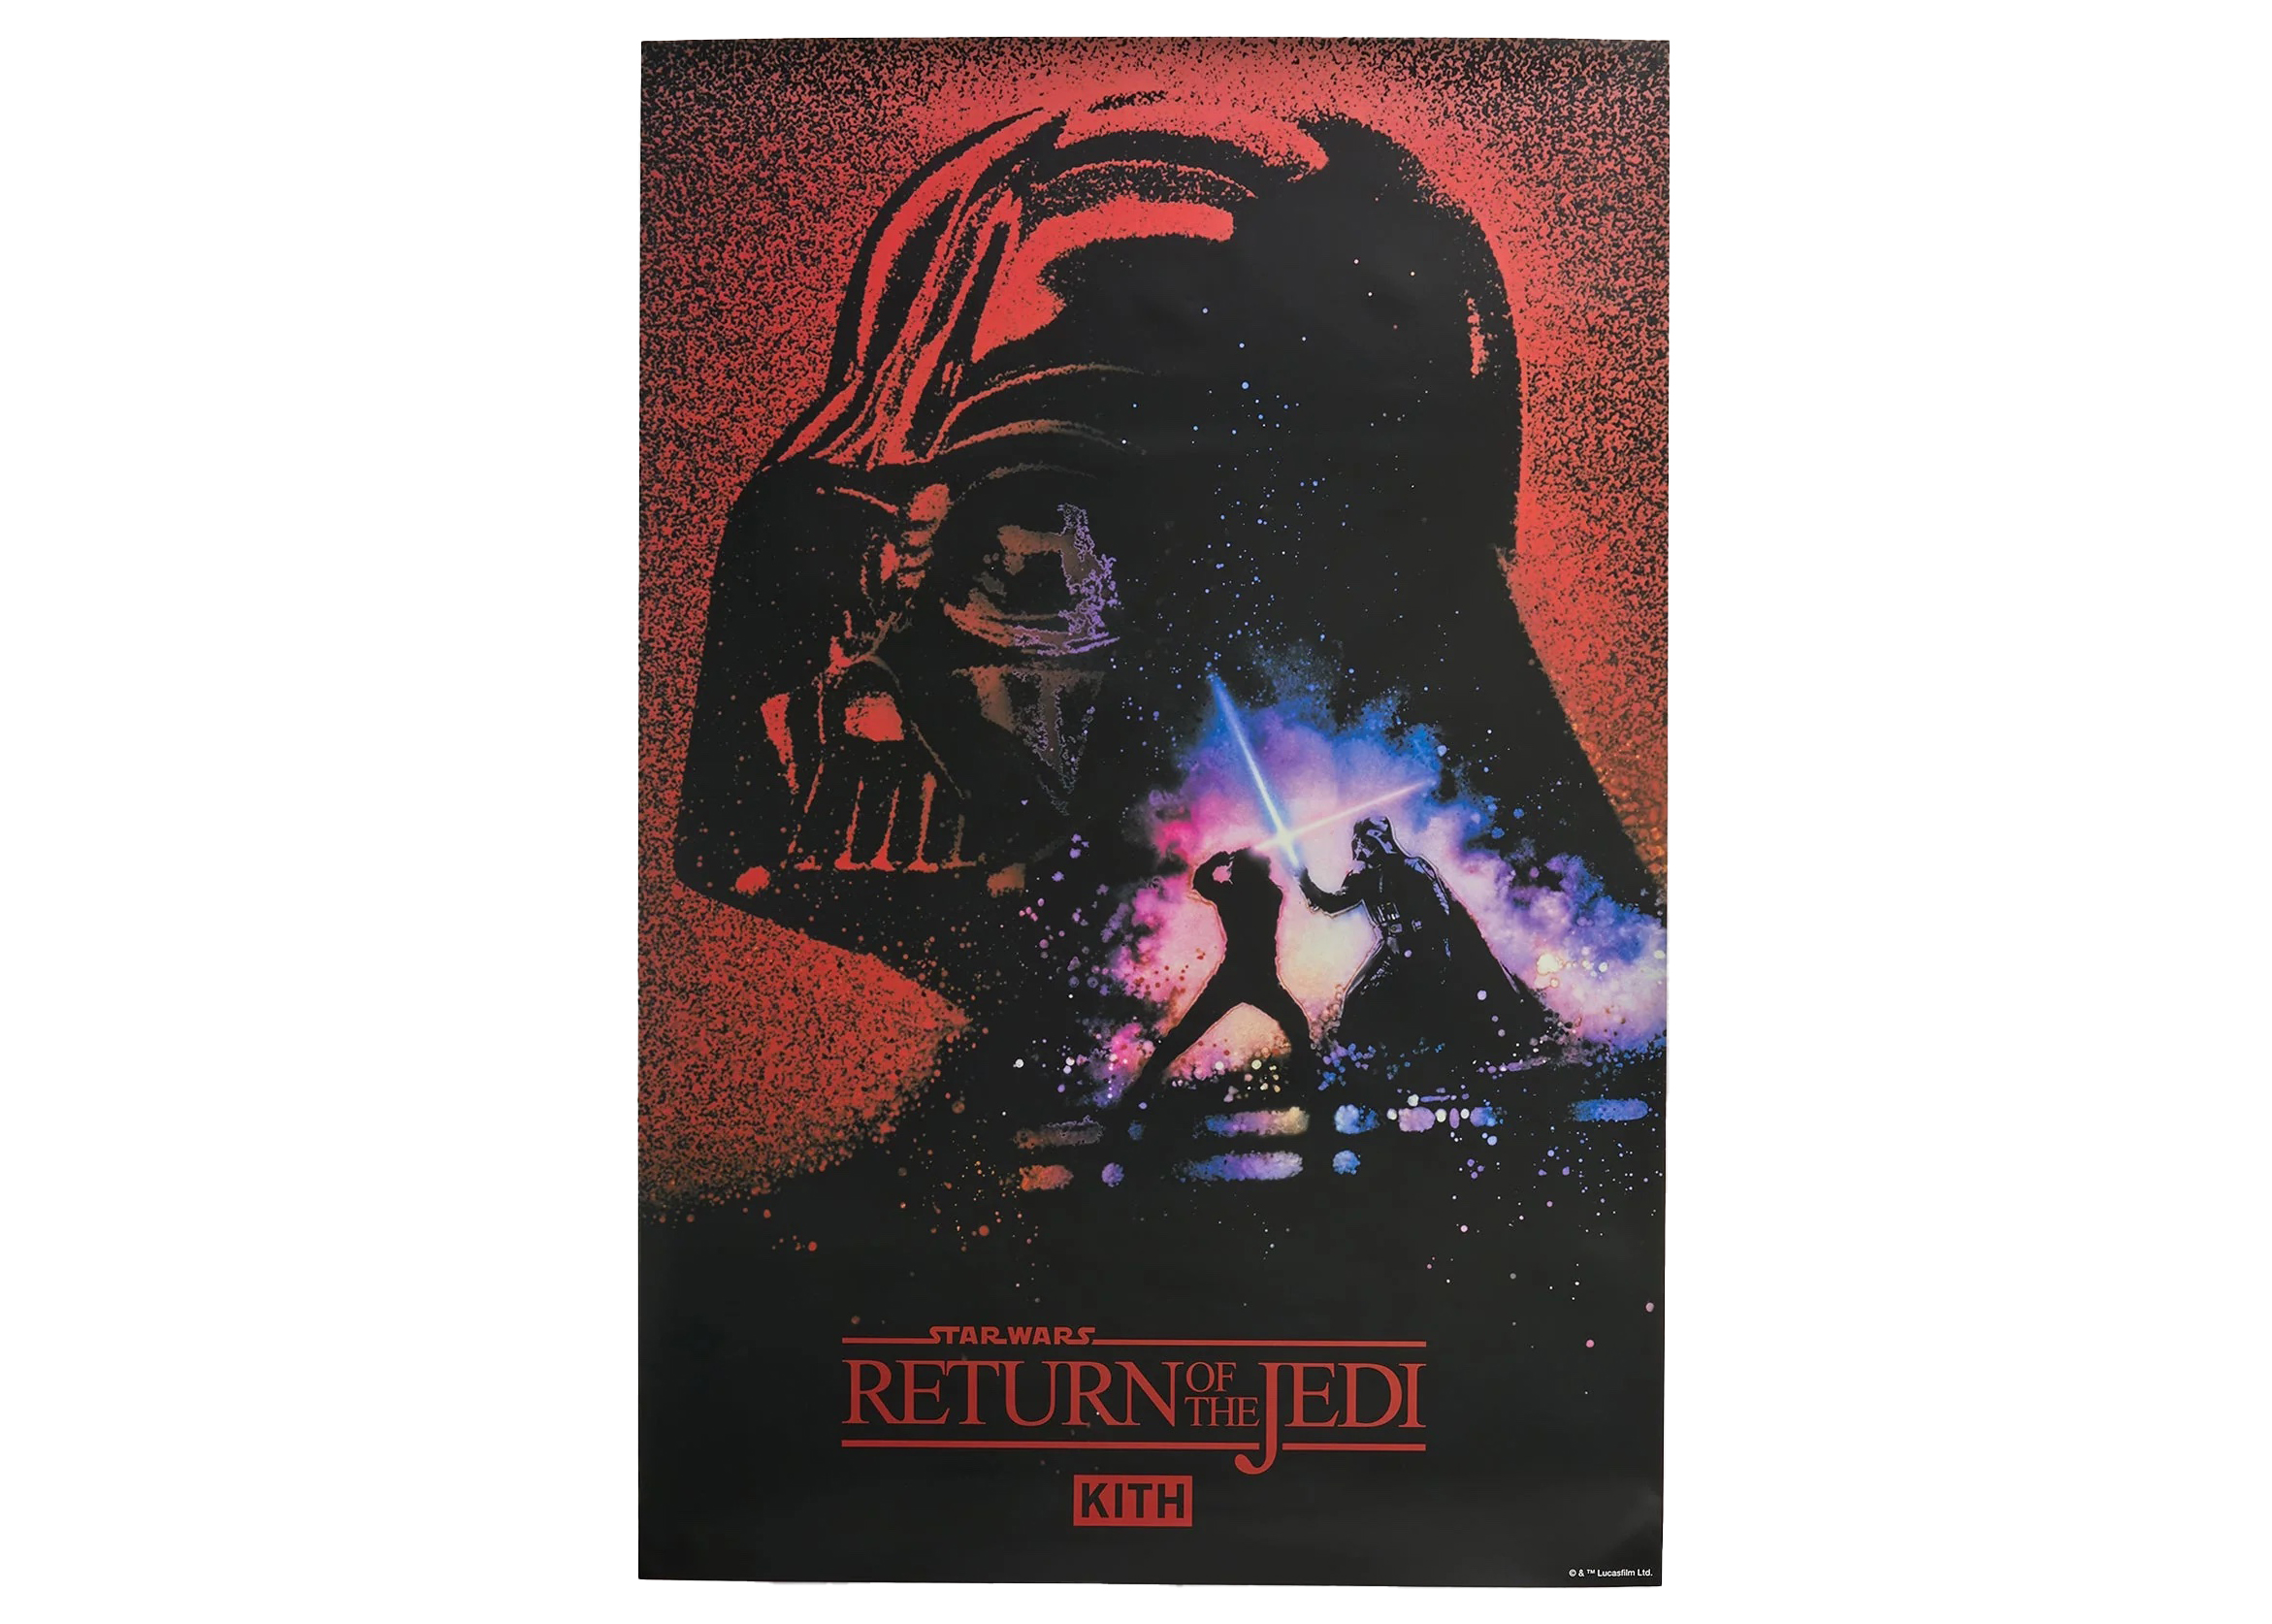 STAR WARS Kith RETURN OF THE JEDI Poster